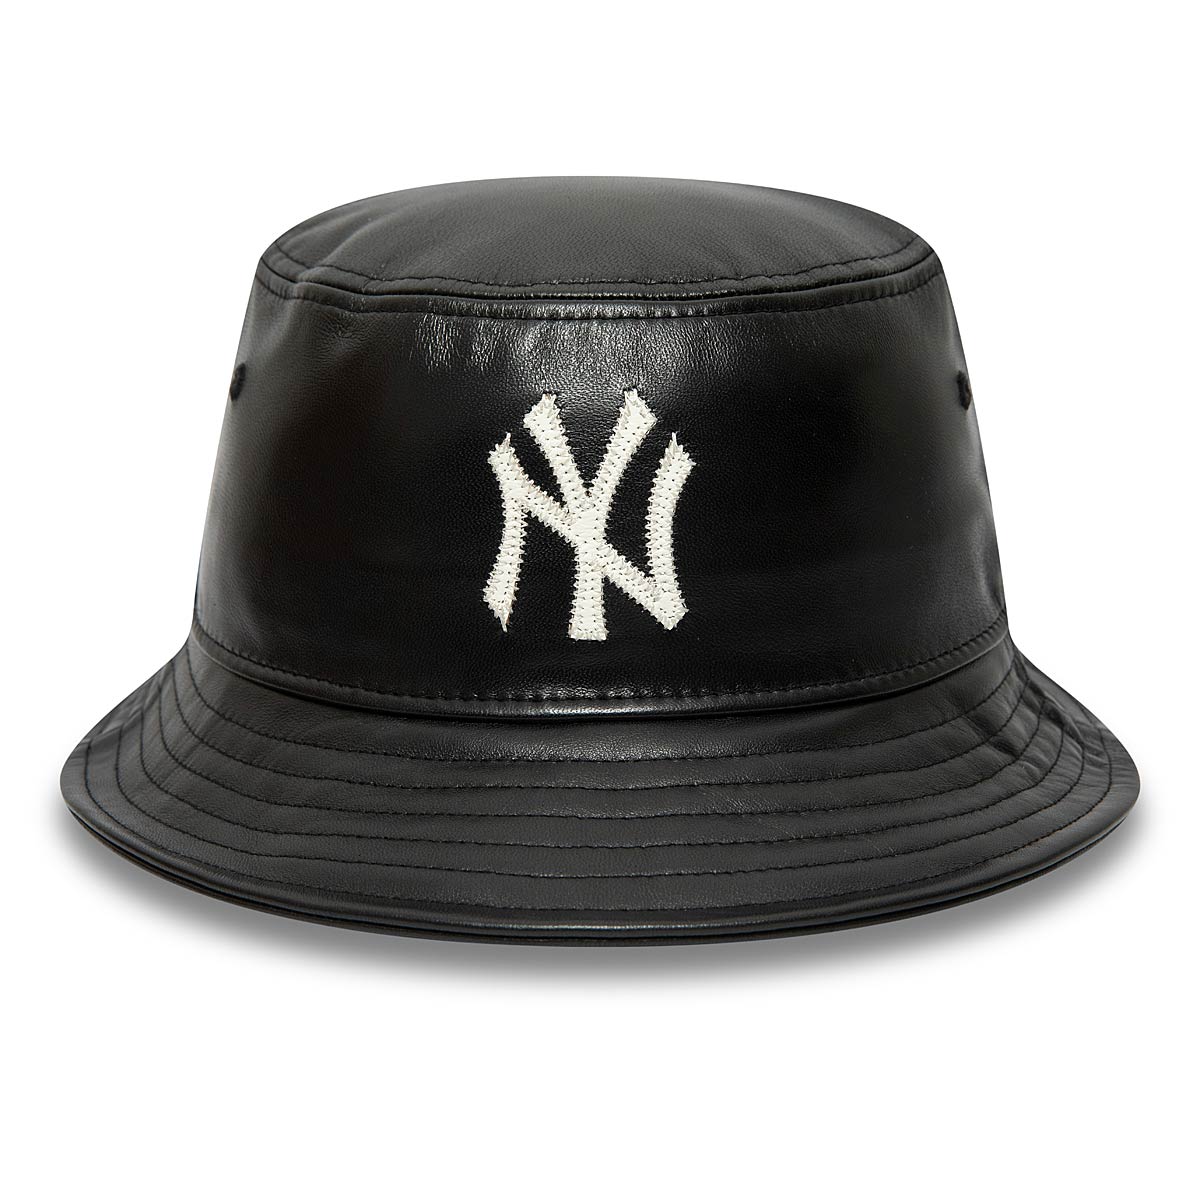 Buy MLB NEW YORK YANKEES LEATHER BUCKET HAT for EUR 99.90 on KICKZ